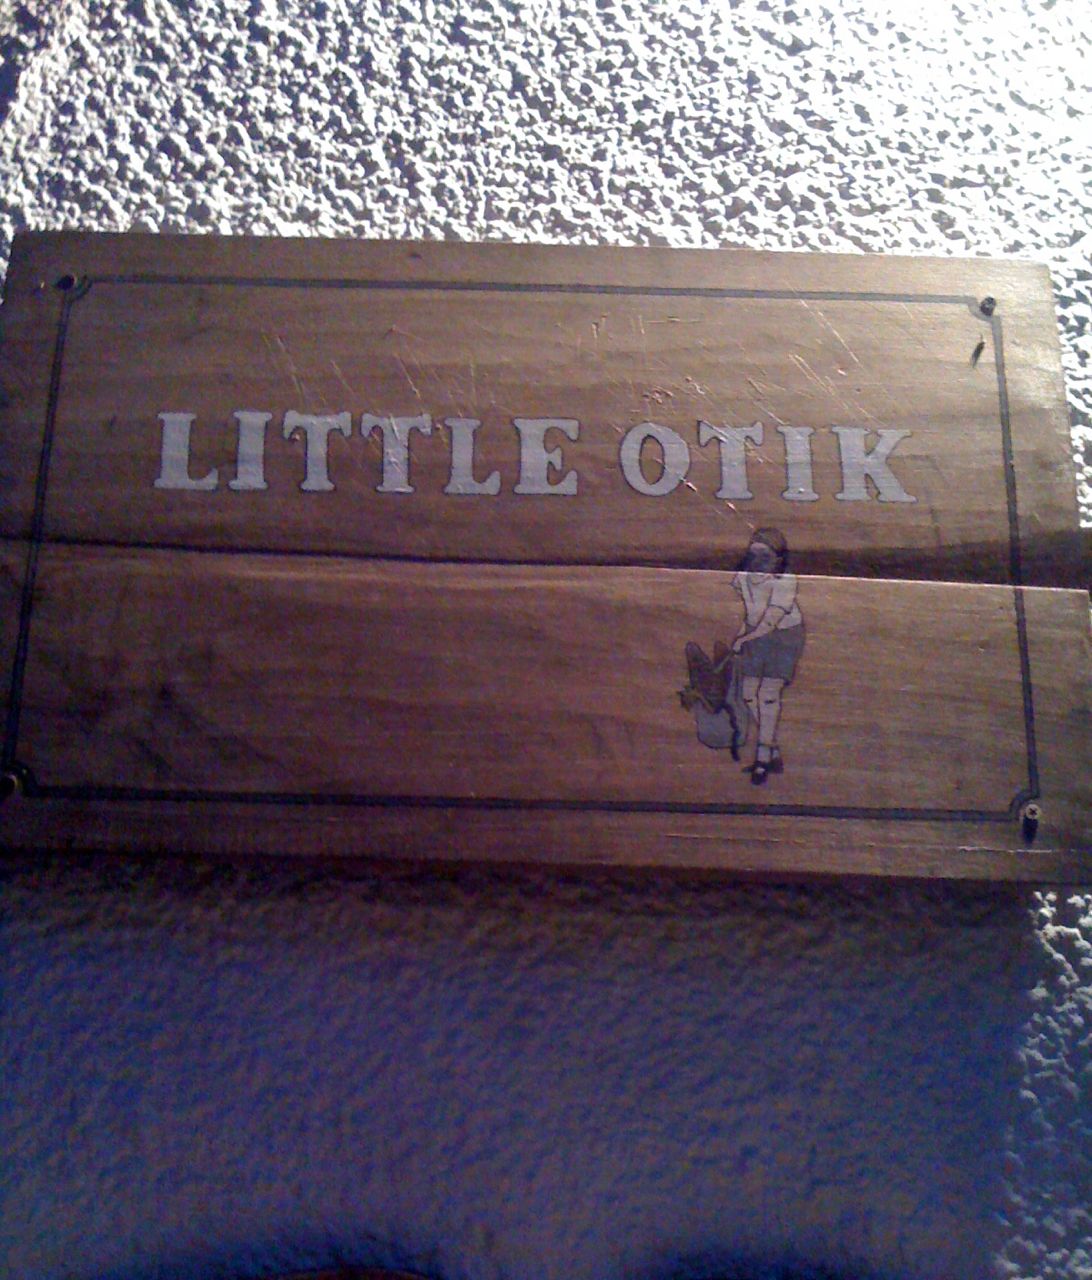 <!--:en-->Dining in out in Berlin’s Graefestrasse at”Little Otik”<!--:-->